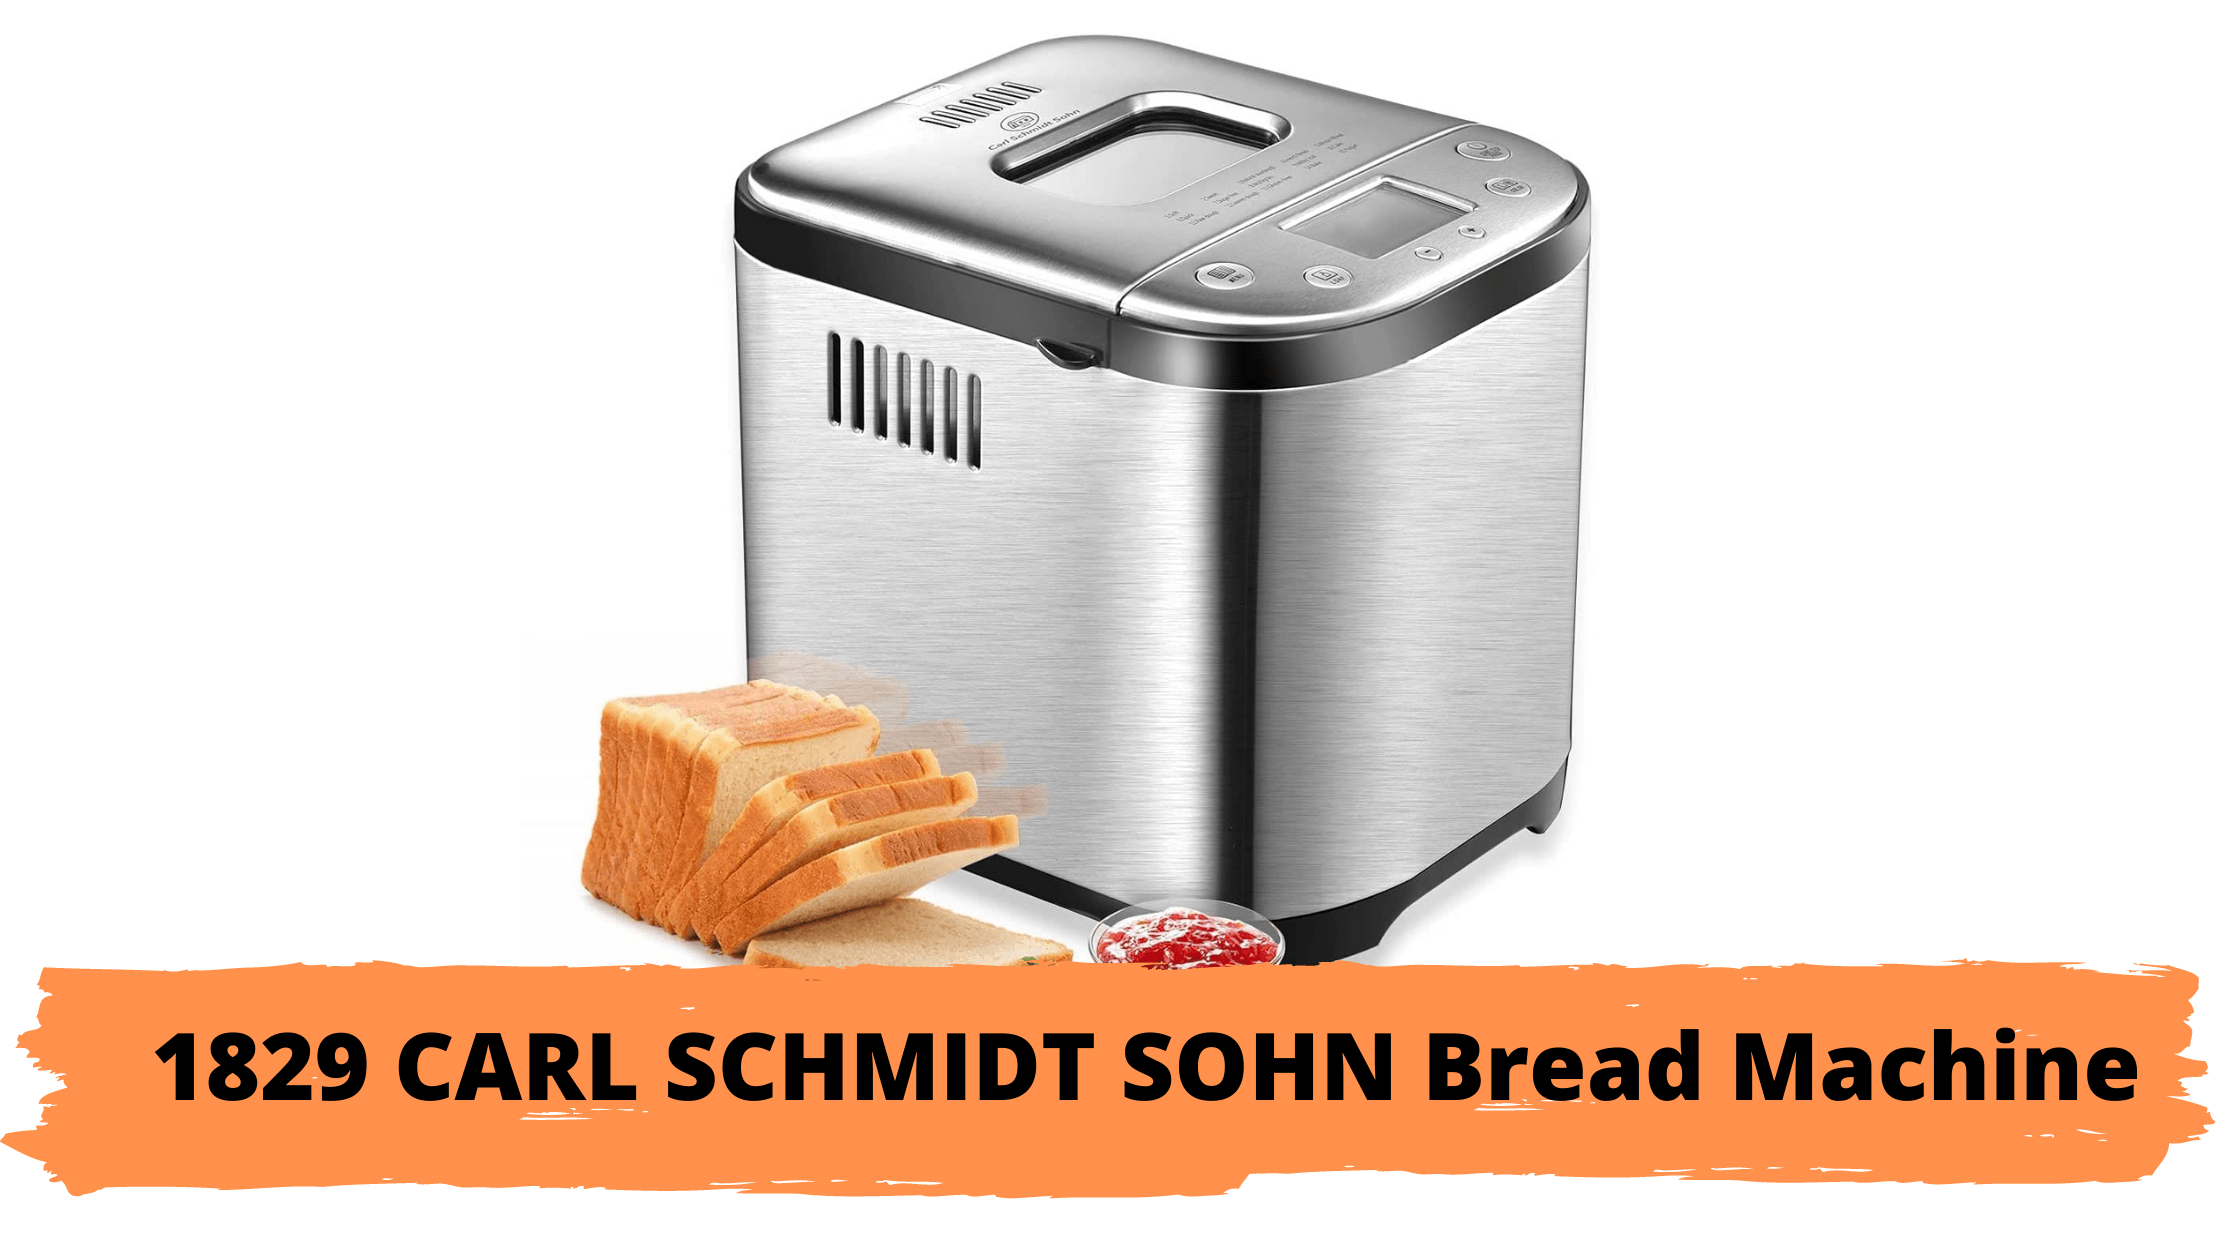 1829 CARL SCHMIDT SOHN Bread Machine Review